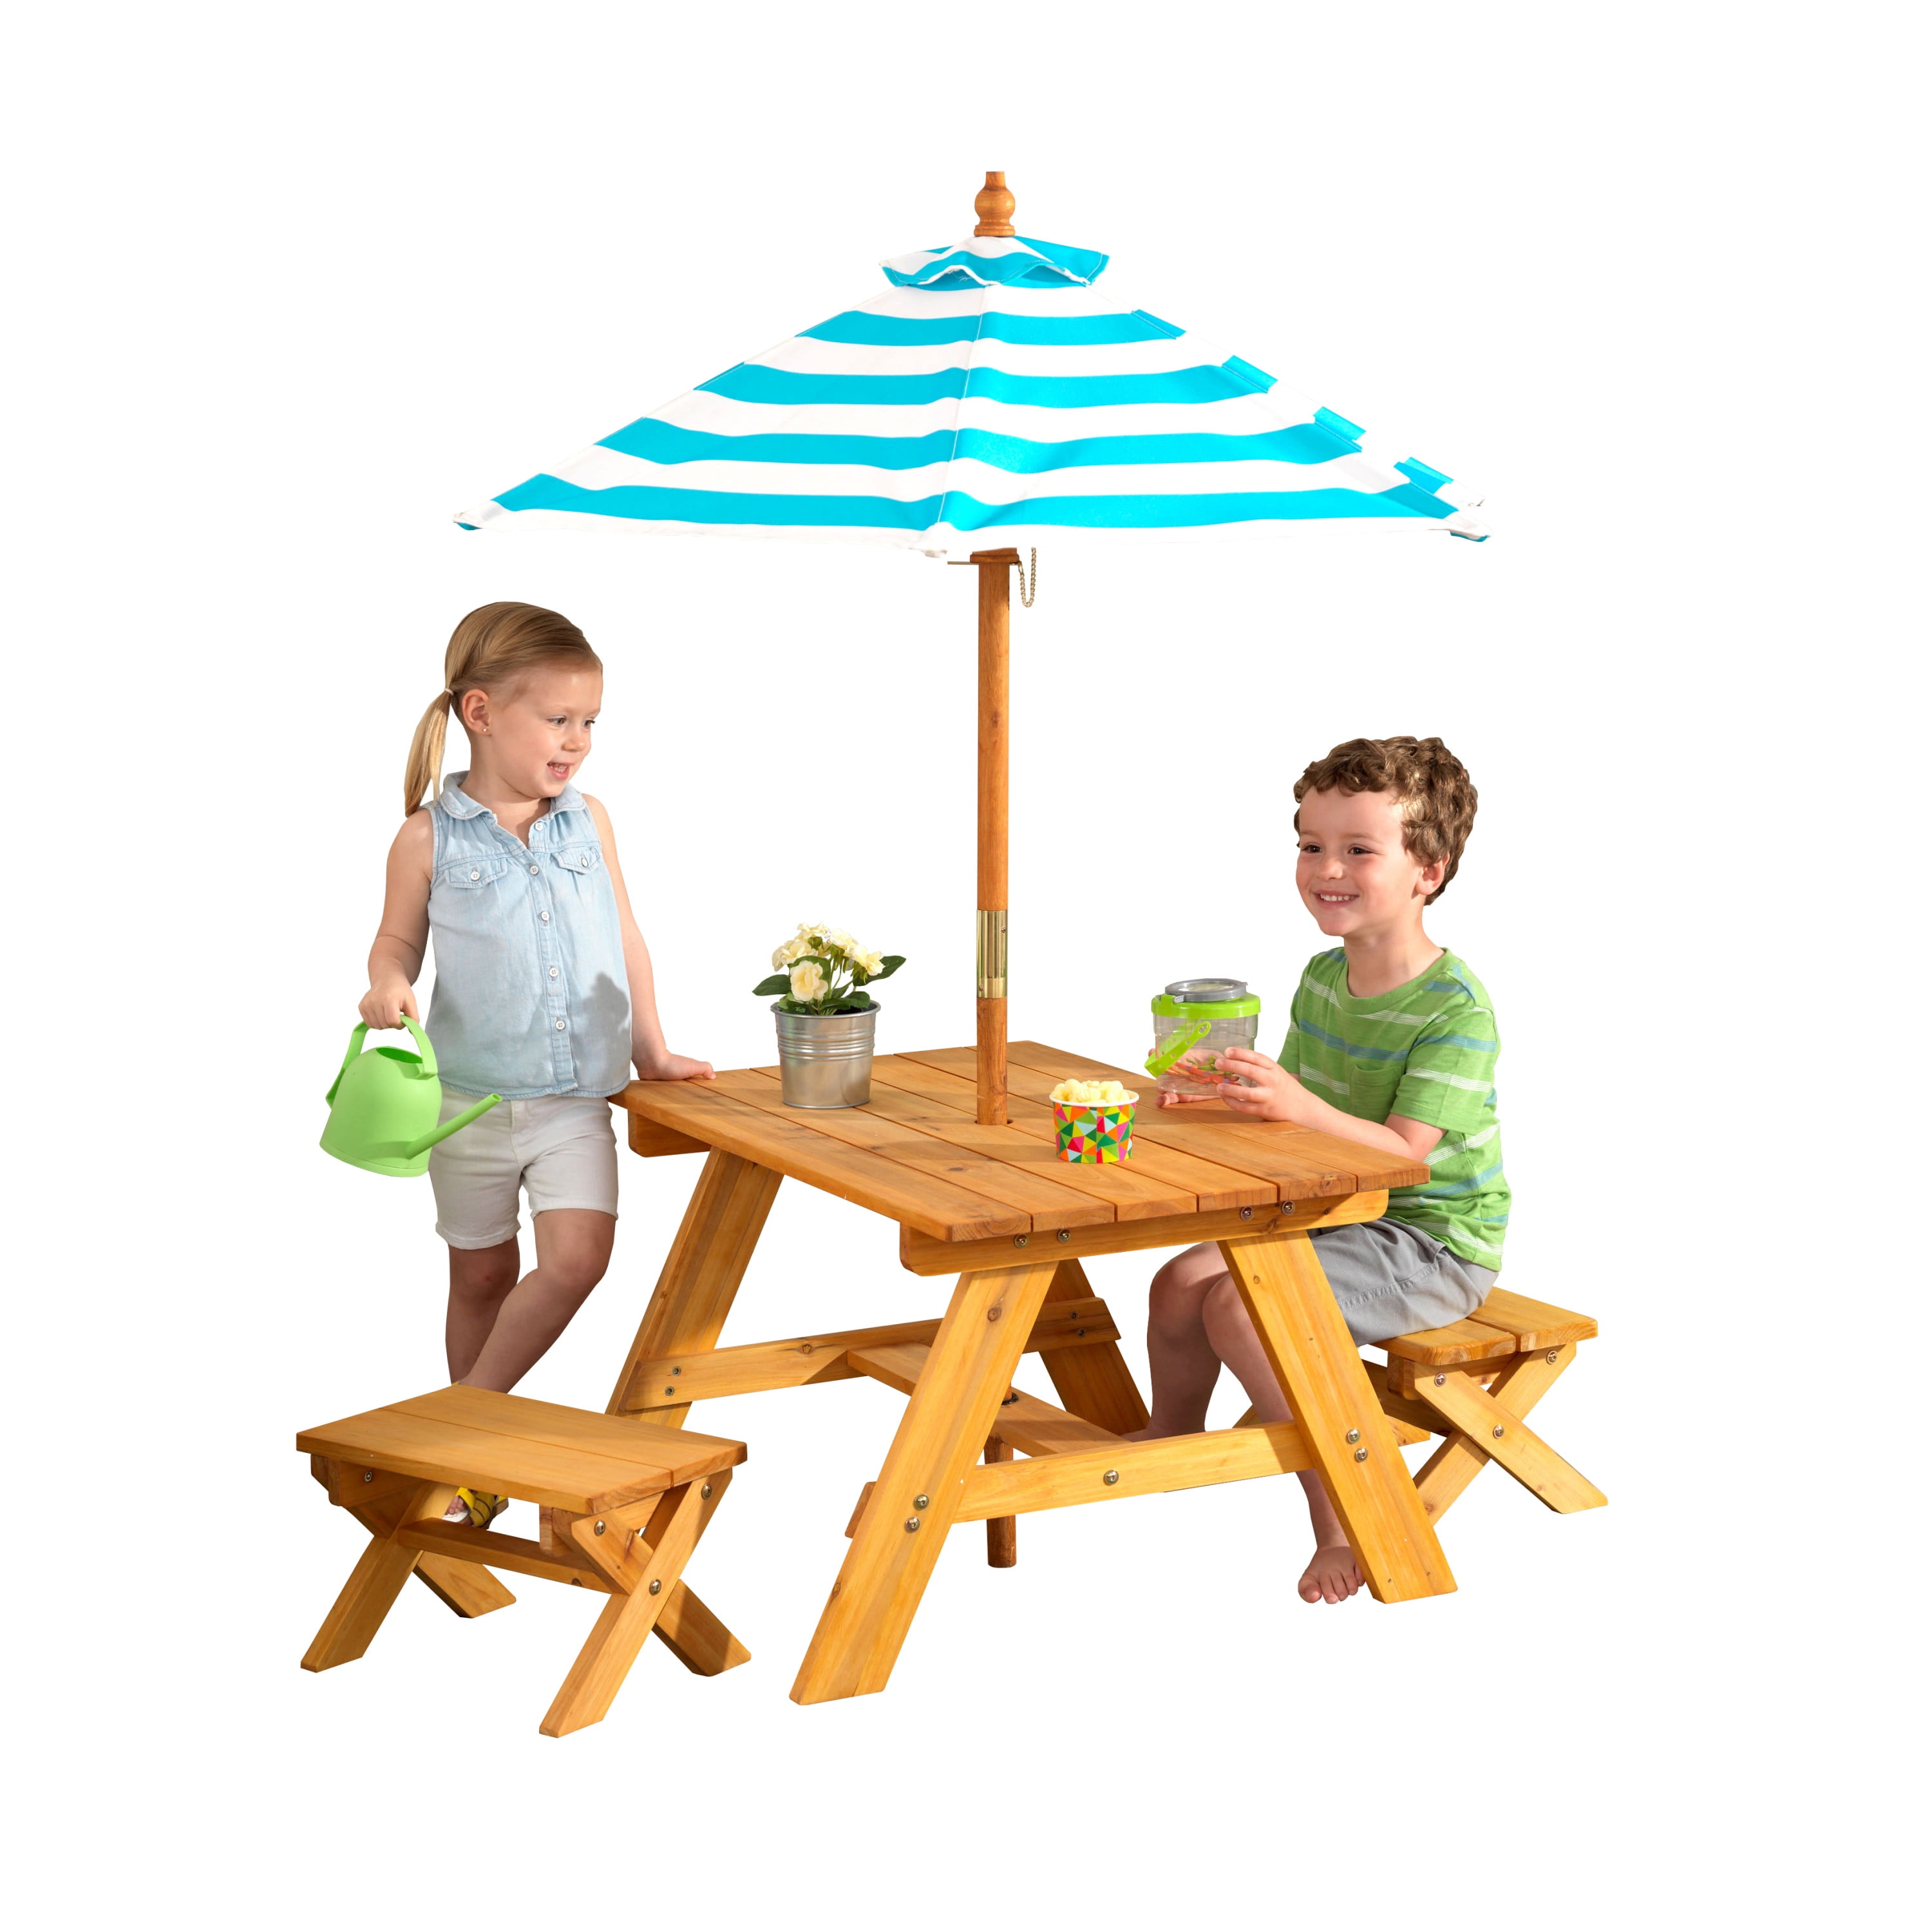 Kidkraft Outdoor Wooden Table Bench, Kidkraft Outdoor Picnic Table